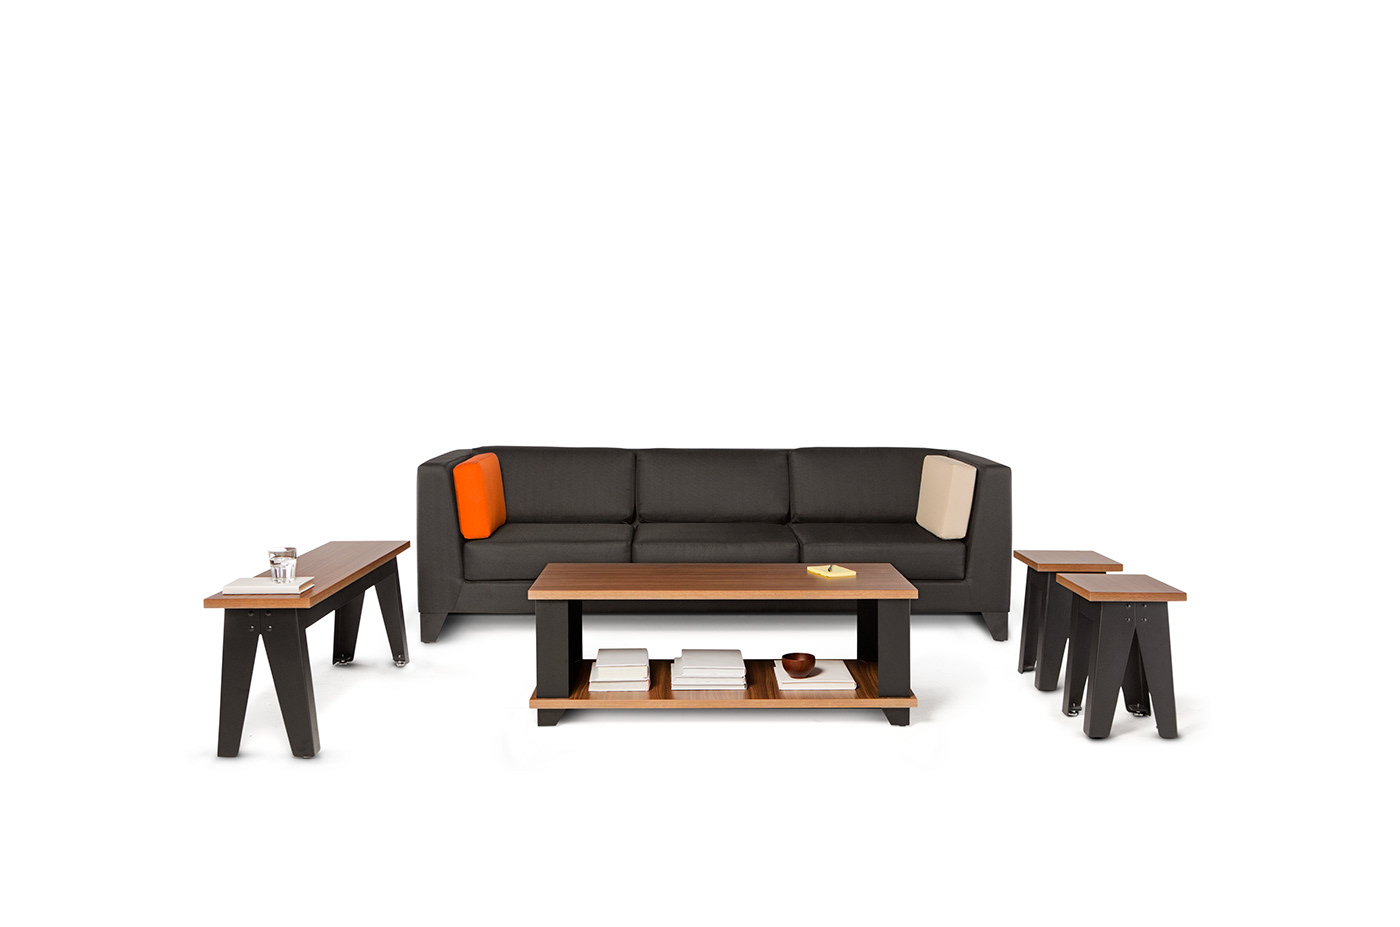 jorge diego etienne ofimodul furniture office furniture Mexican Design